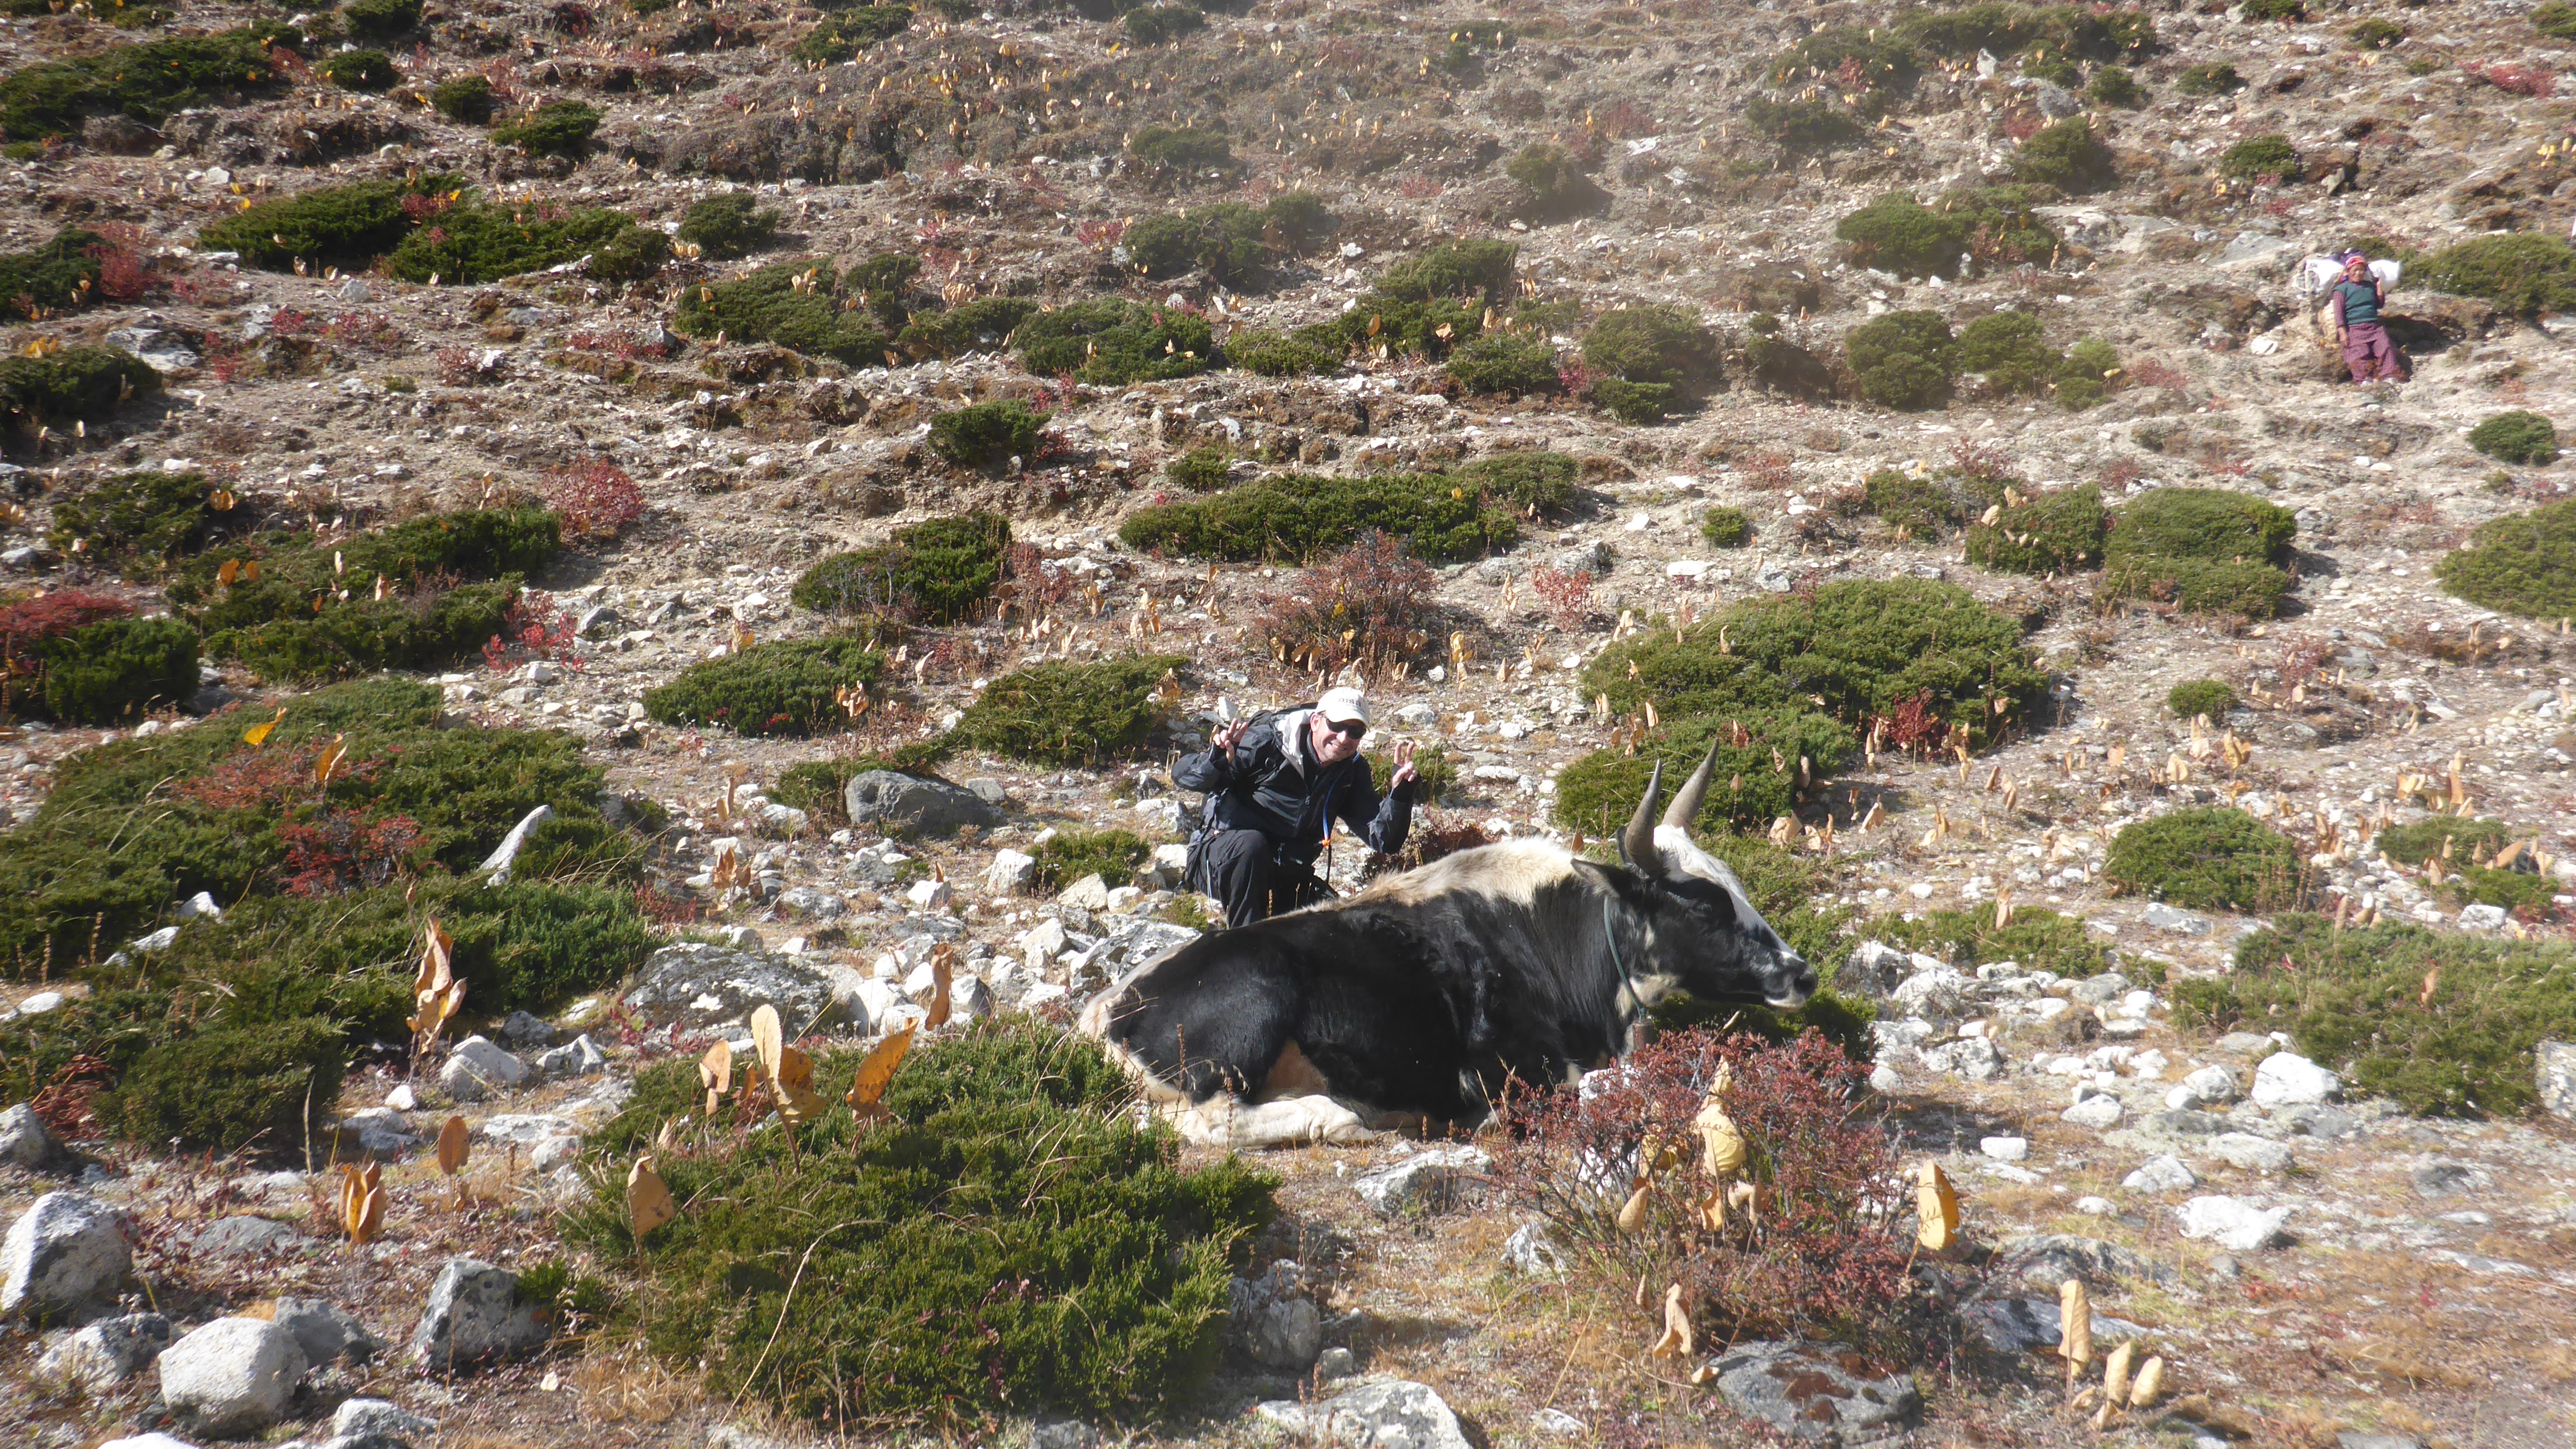 Tony photo bombing yaks